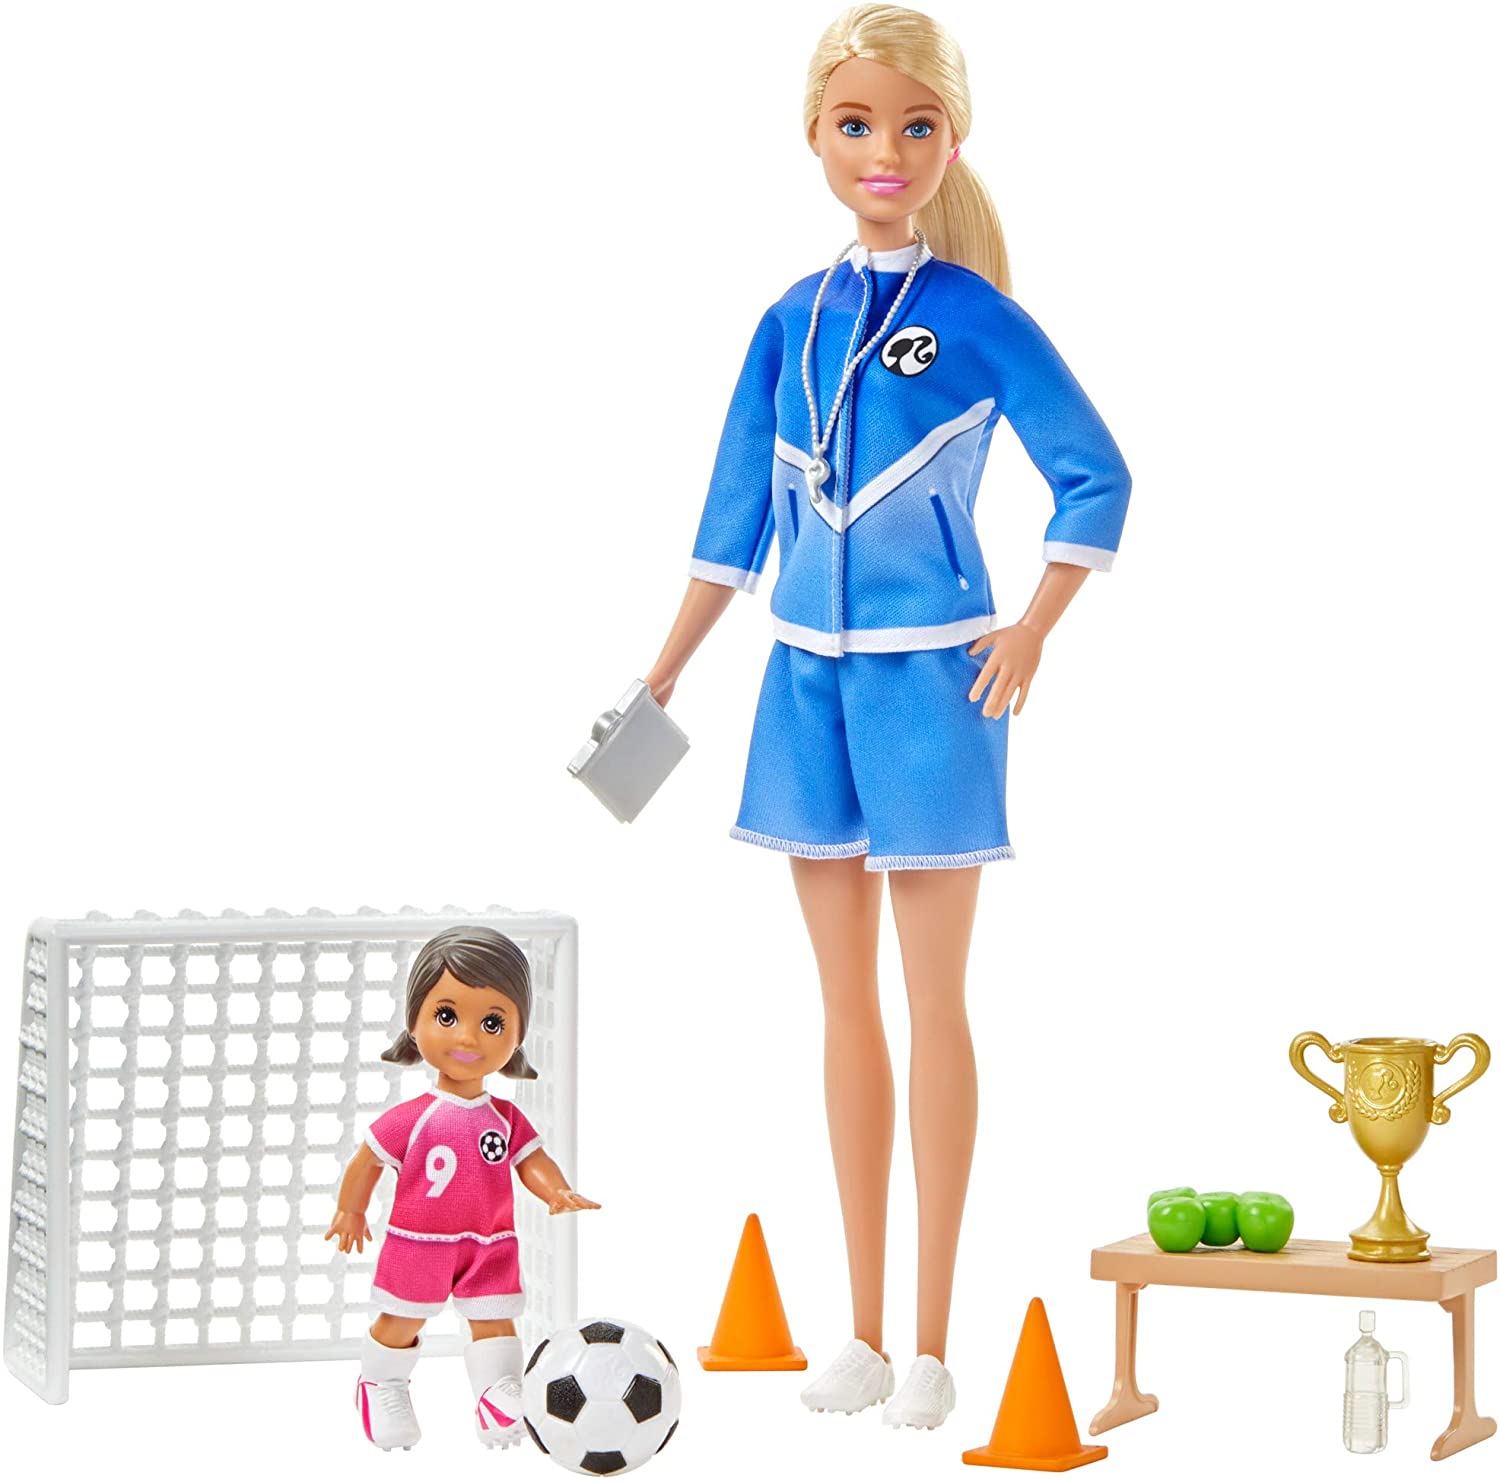 Barbie Soccer Coach Doll